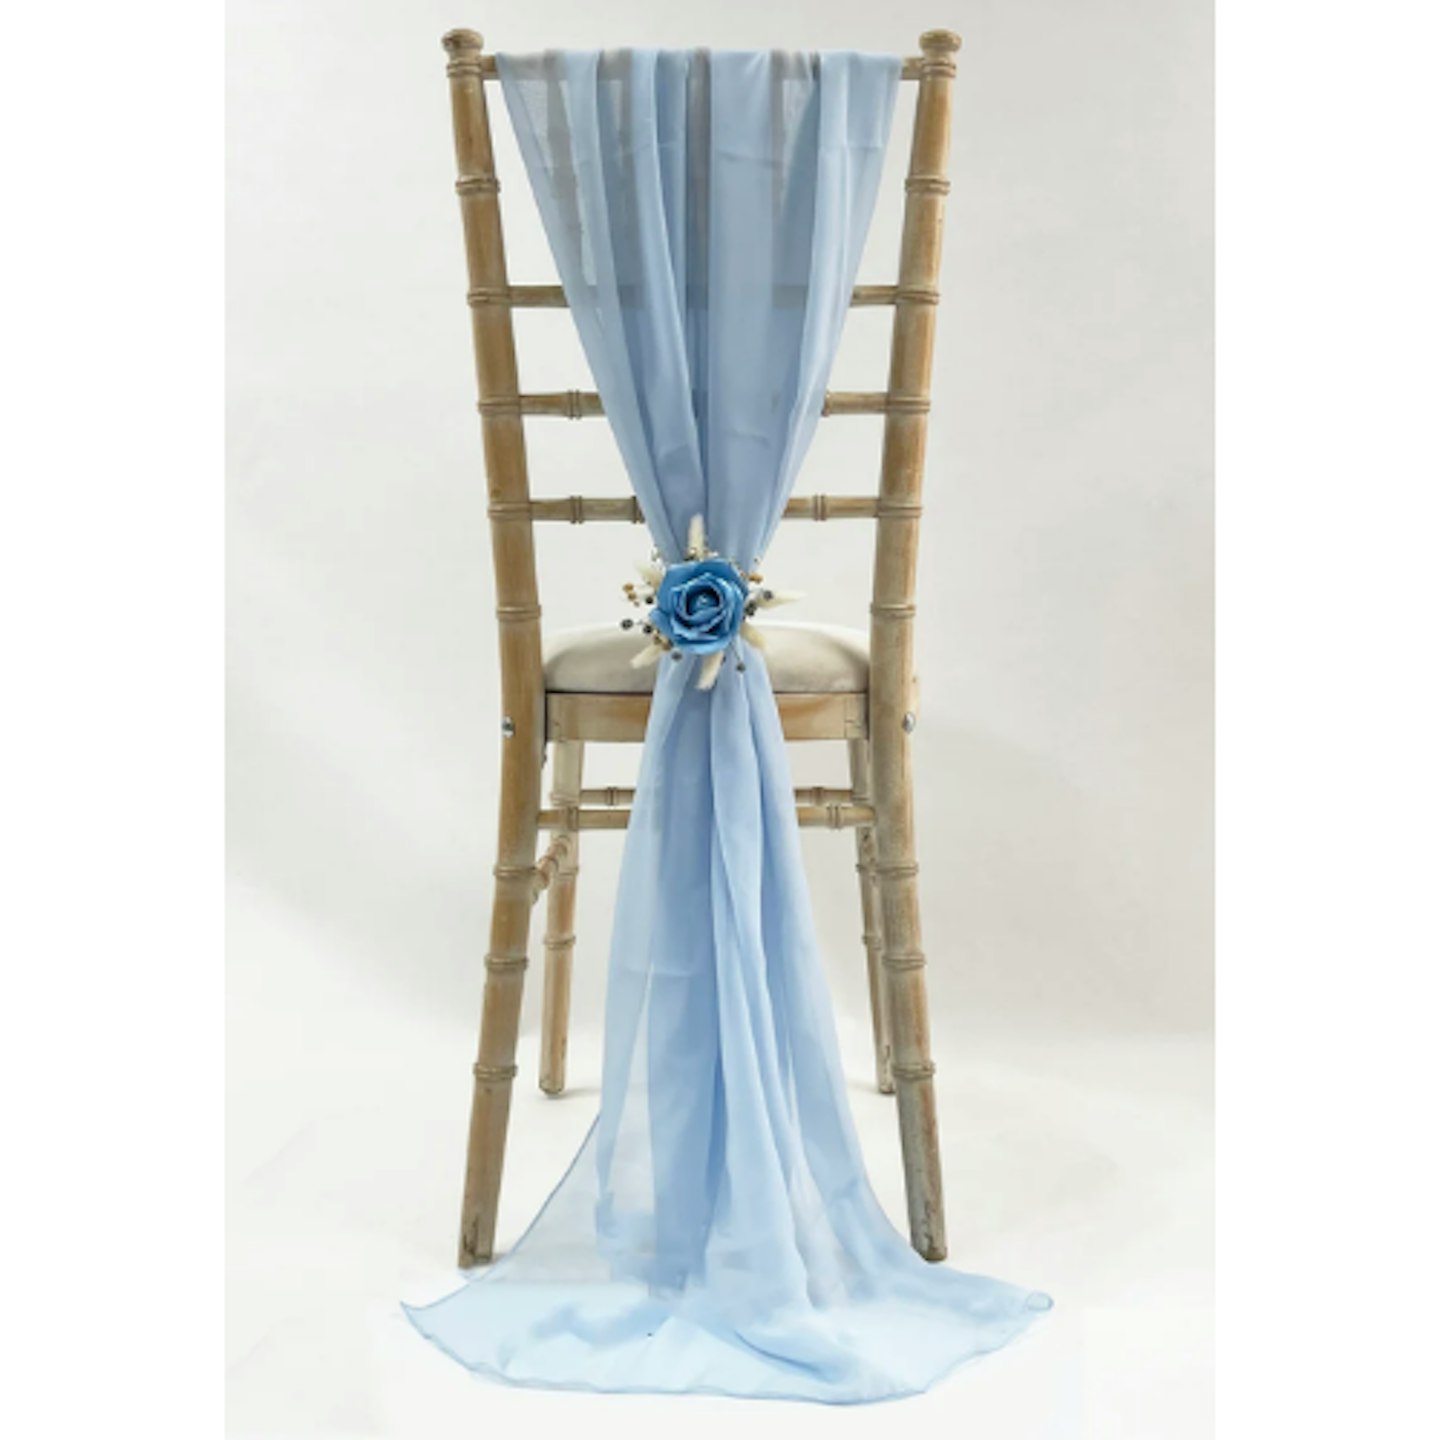 Chiffon Vertical Chair Drapes in Light Blue